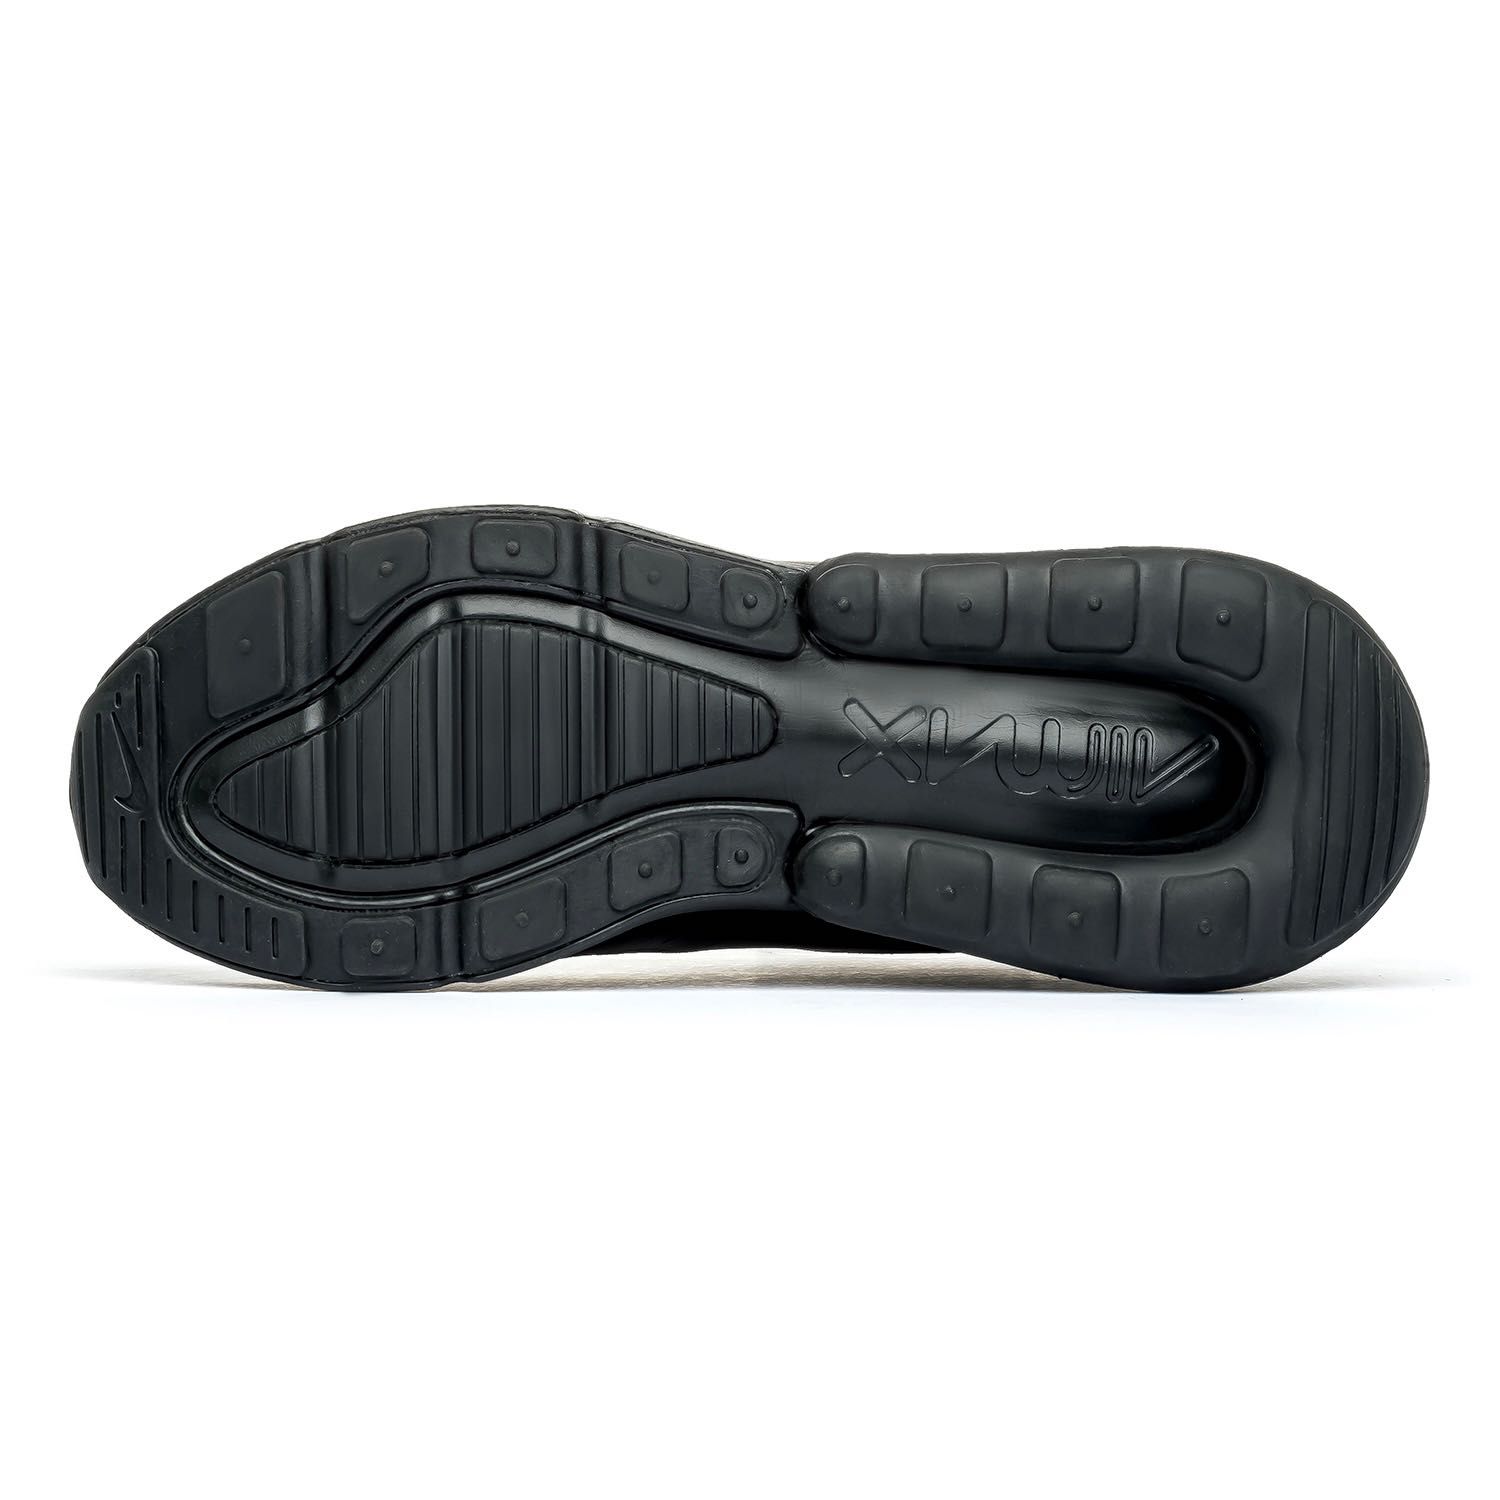 Мужские кроссовки Nike Air Max 270 Black. Размеры 41-45